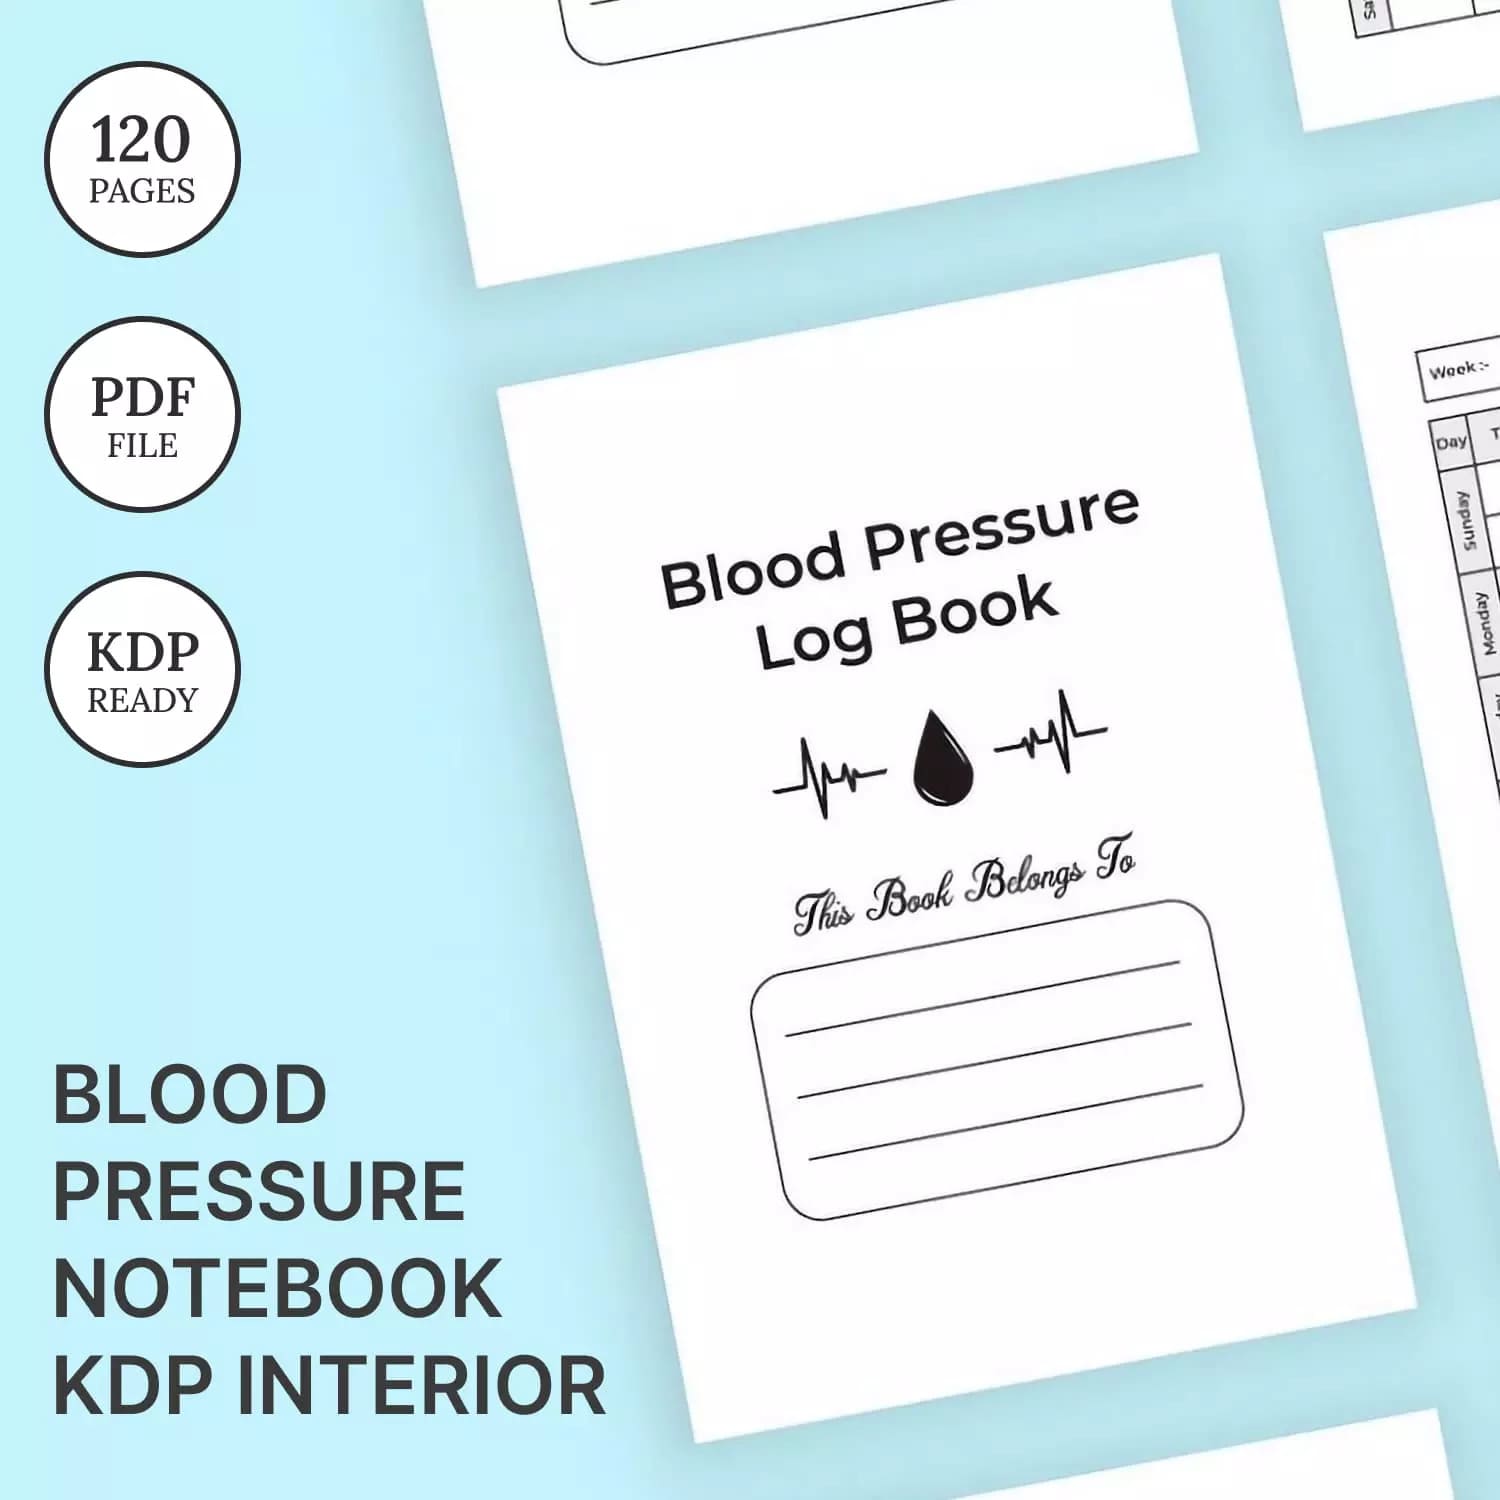 Blood Pressure Notebook Kdp Interior Preview image.